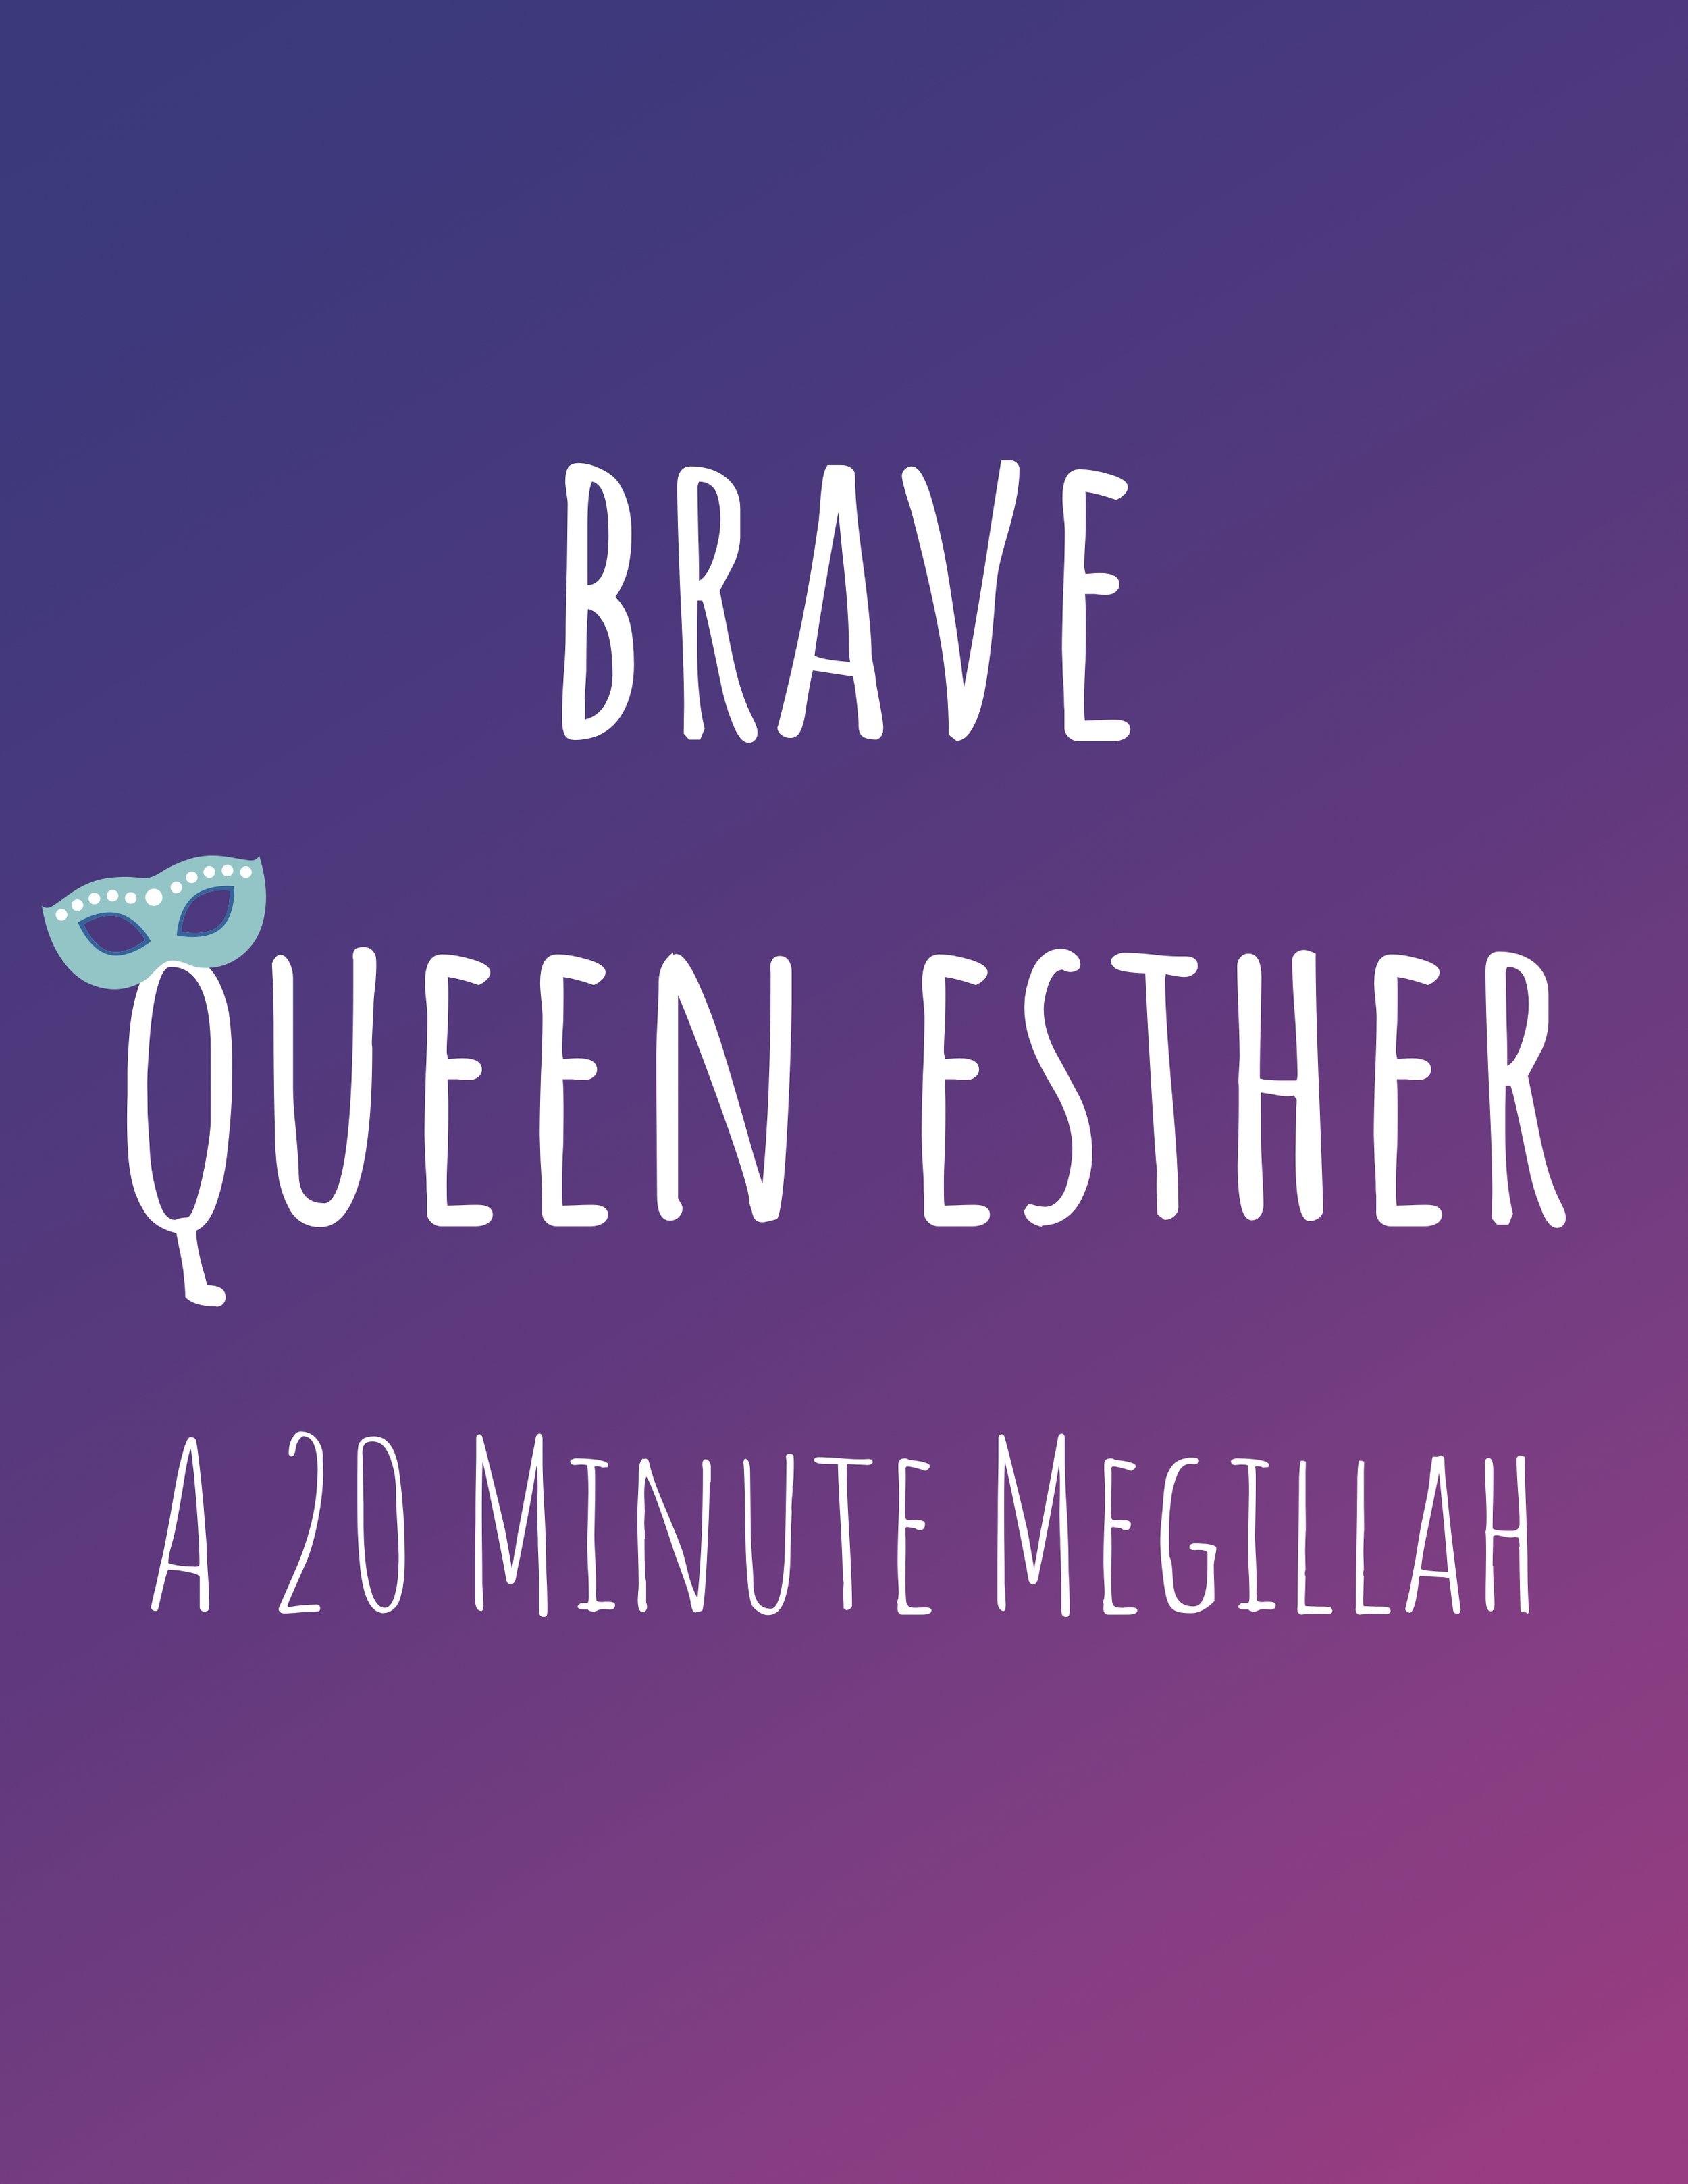 Brave Queen Esther poster.jpg